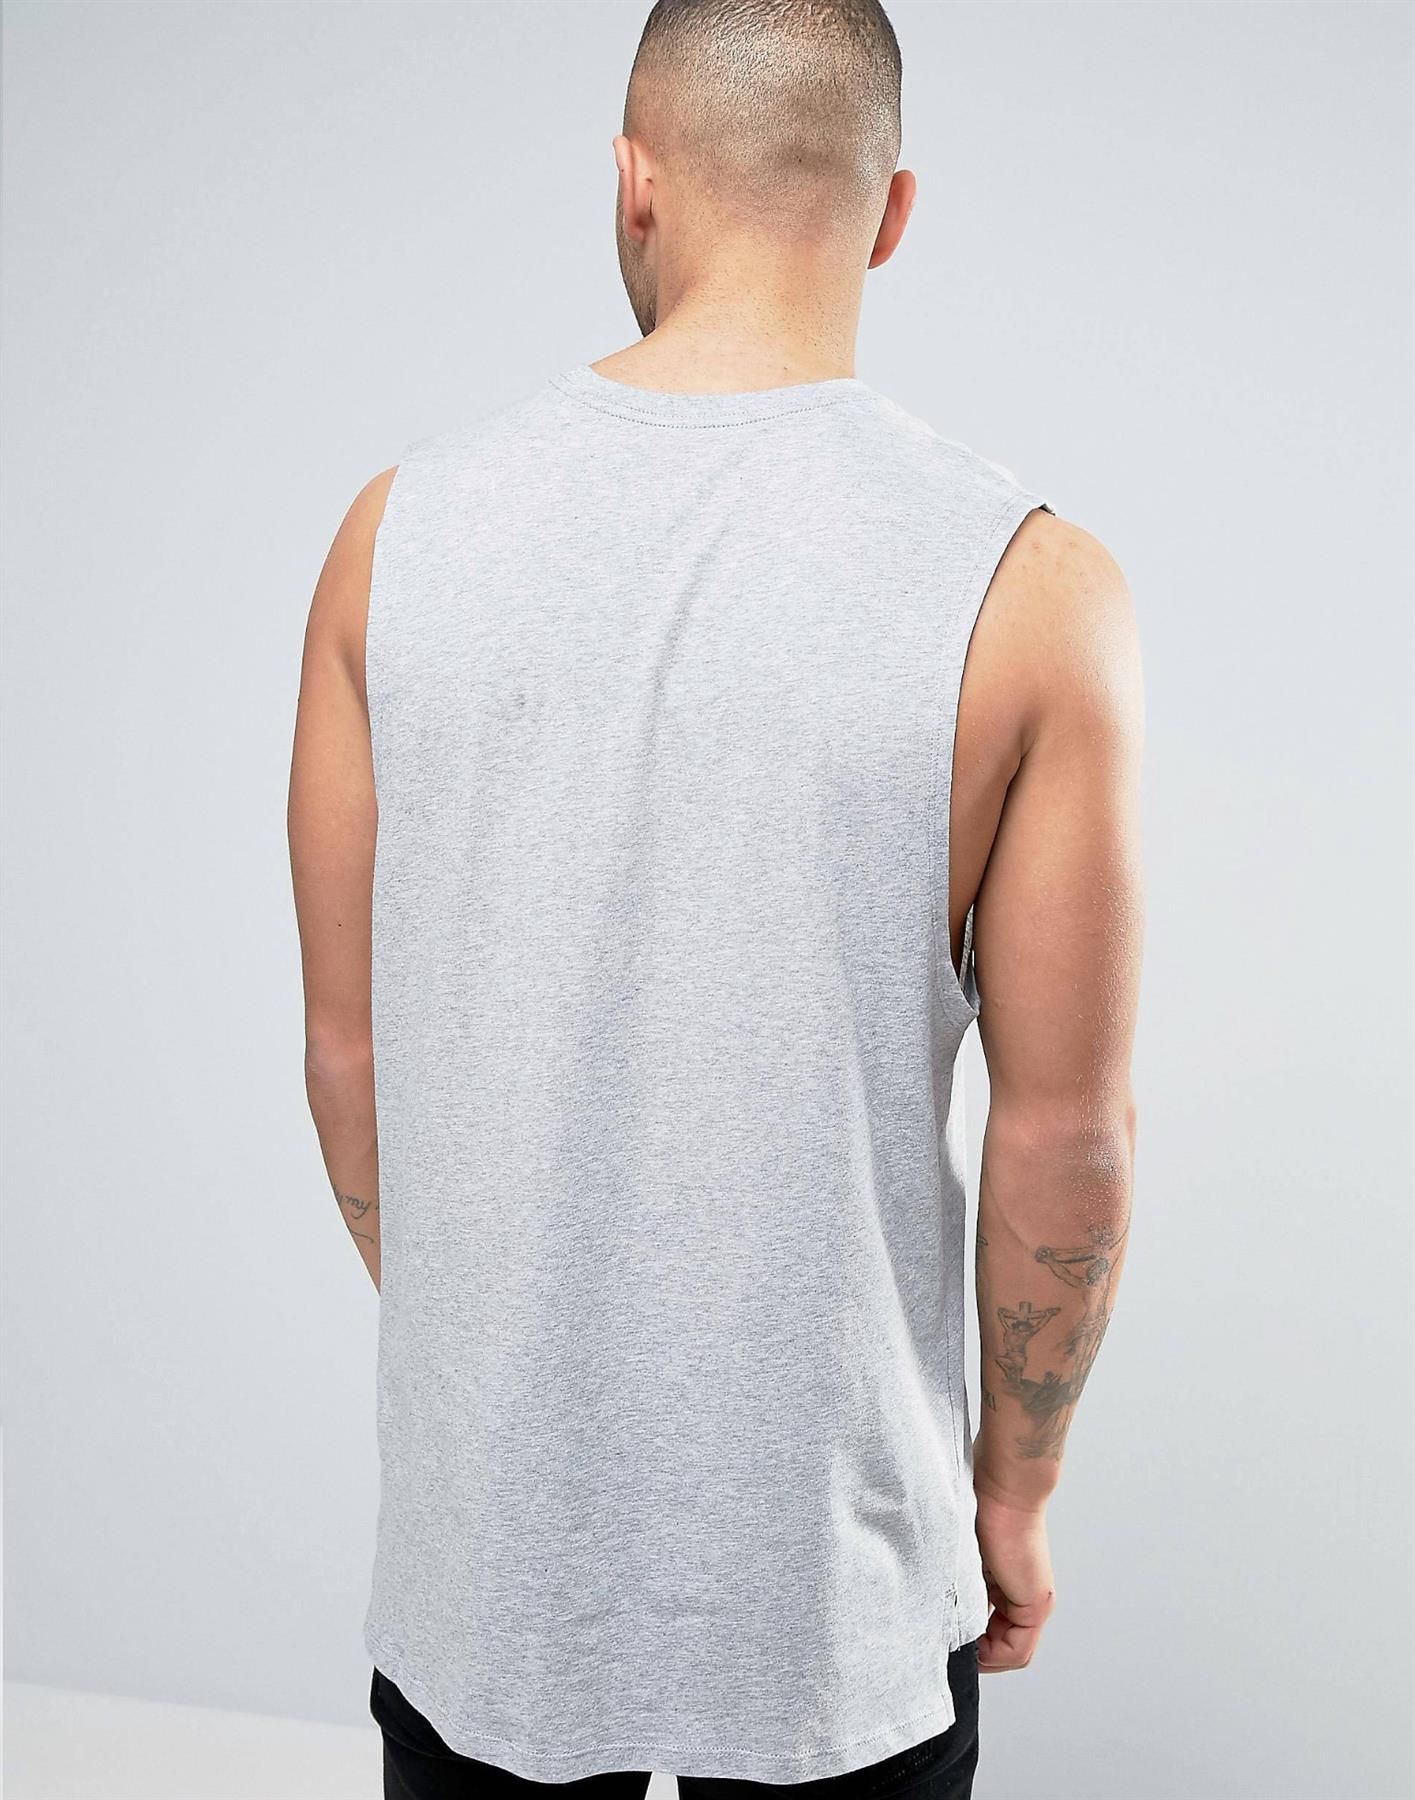 Nike Black Sleeveless T-shirt With Retro Logo.
Sleeveless Vest Shirt From Nike.
Breathable Cotton.
Round Neck.
Athletic Cut.